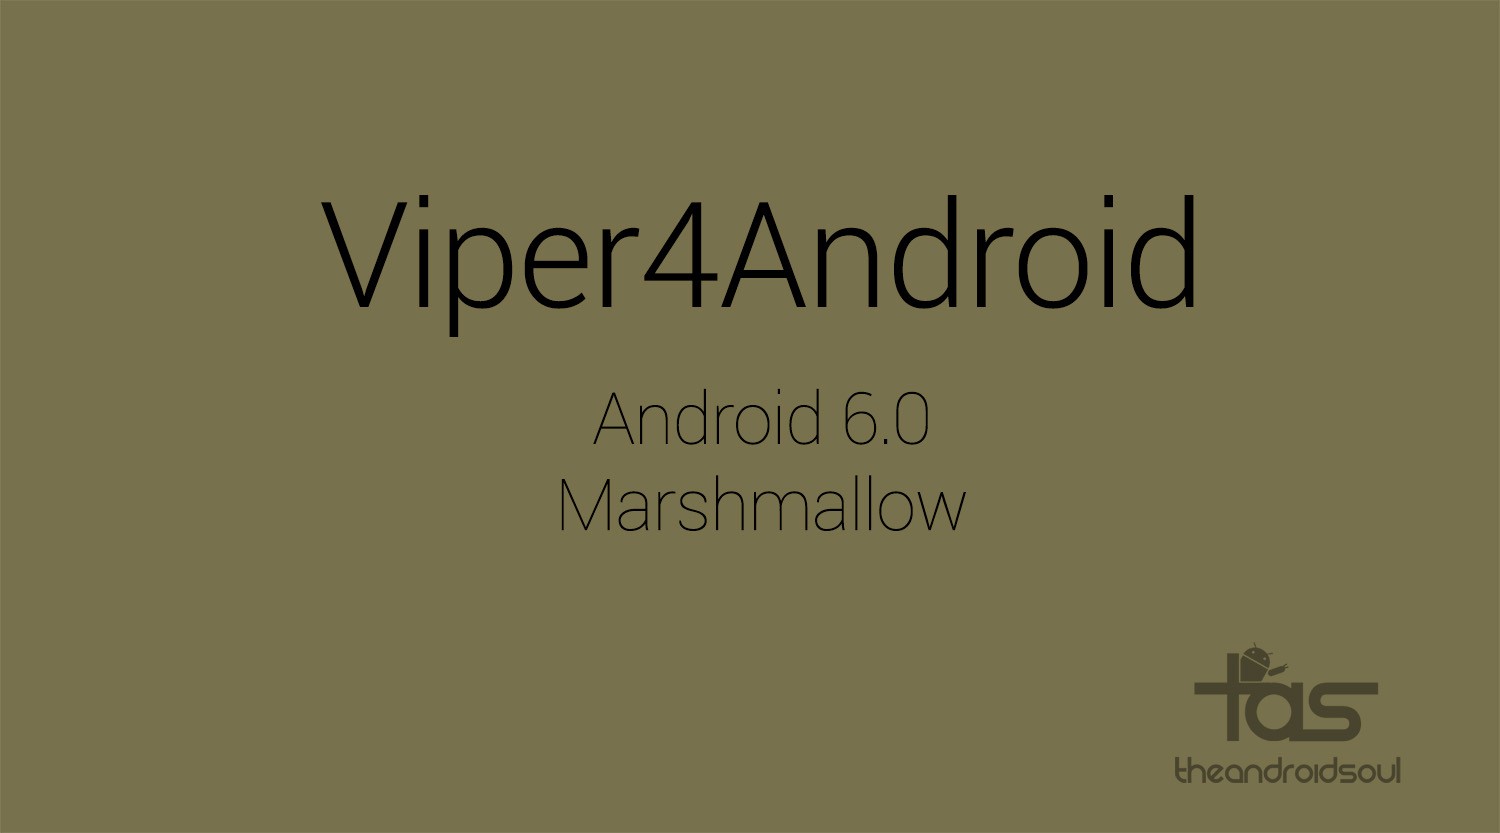 Descargar Viper4Android para Marshmallow Android 6.0